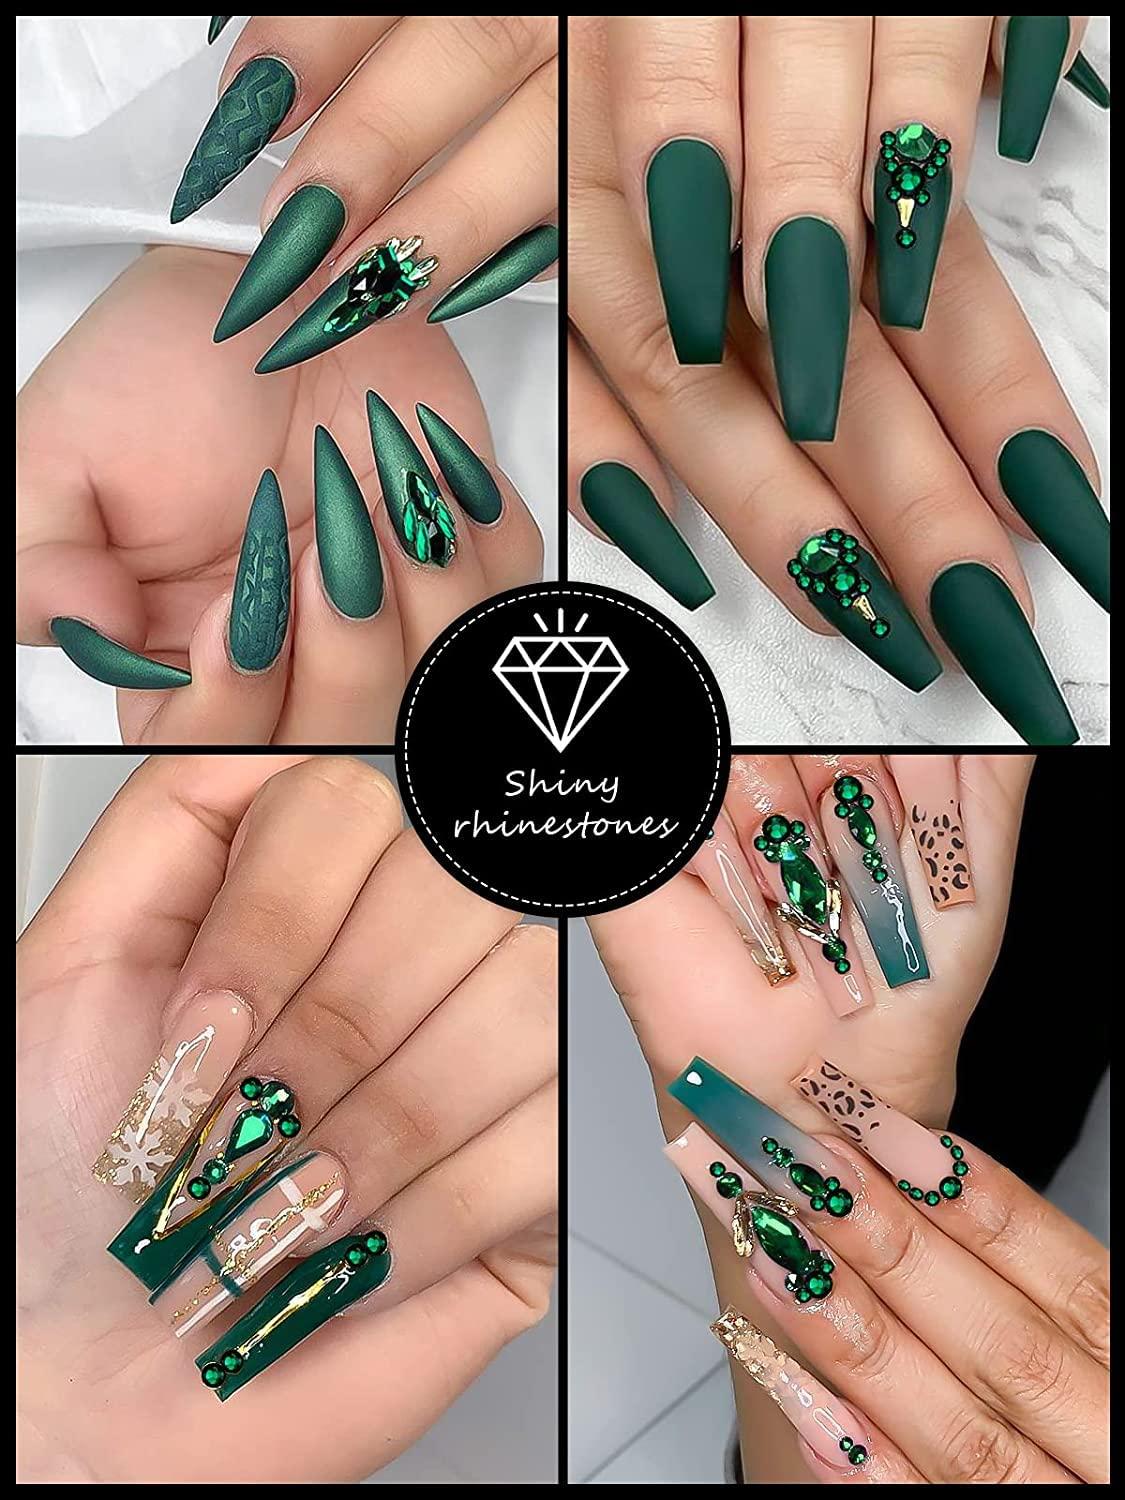 Swarovski Emerald Green Nail Art Rhinestone